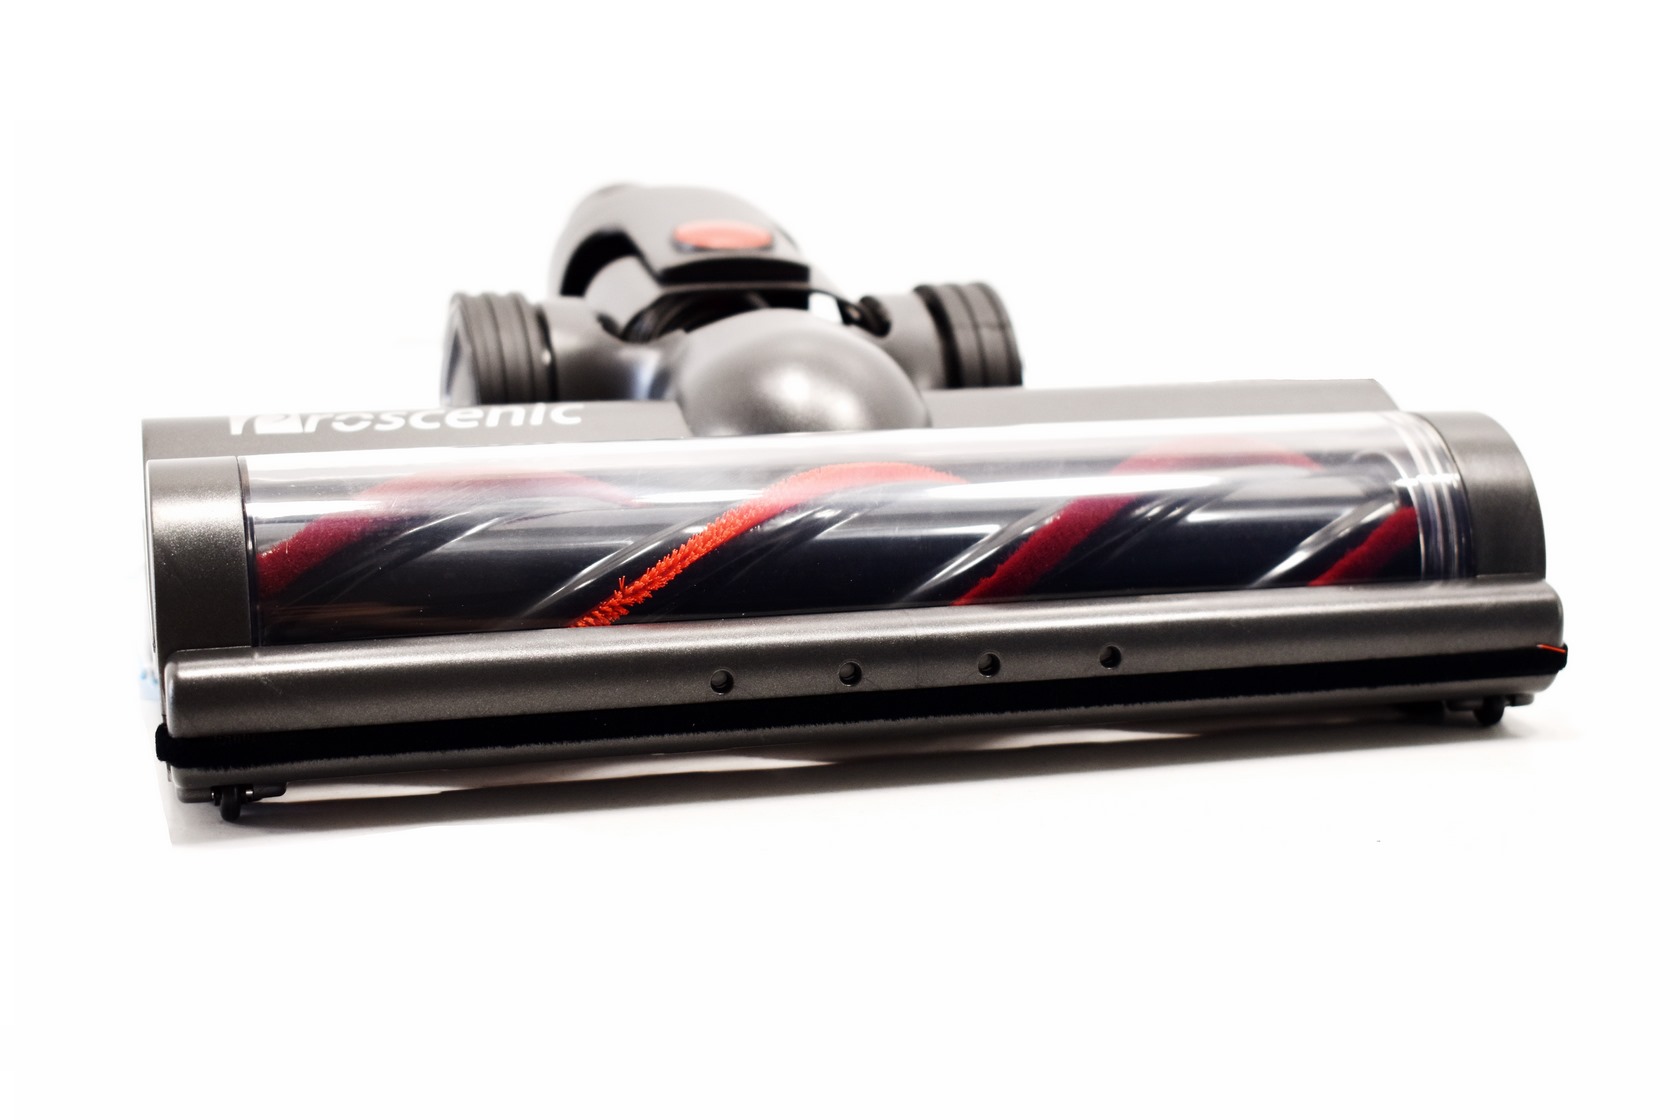 Proscenic P11 Cordless Vacuum Cleaner Review - SlashGear